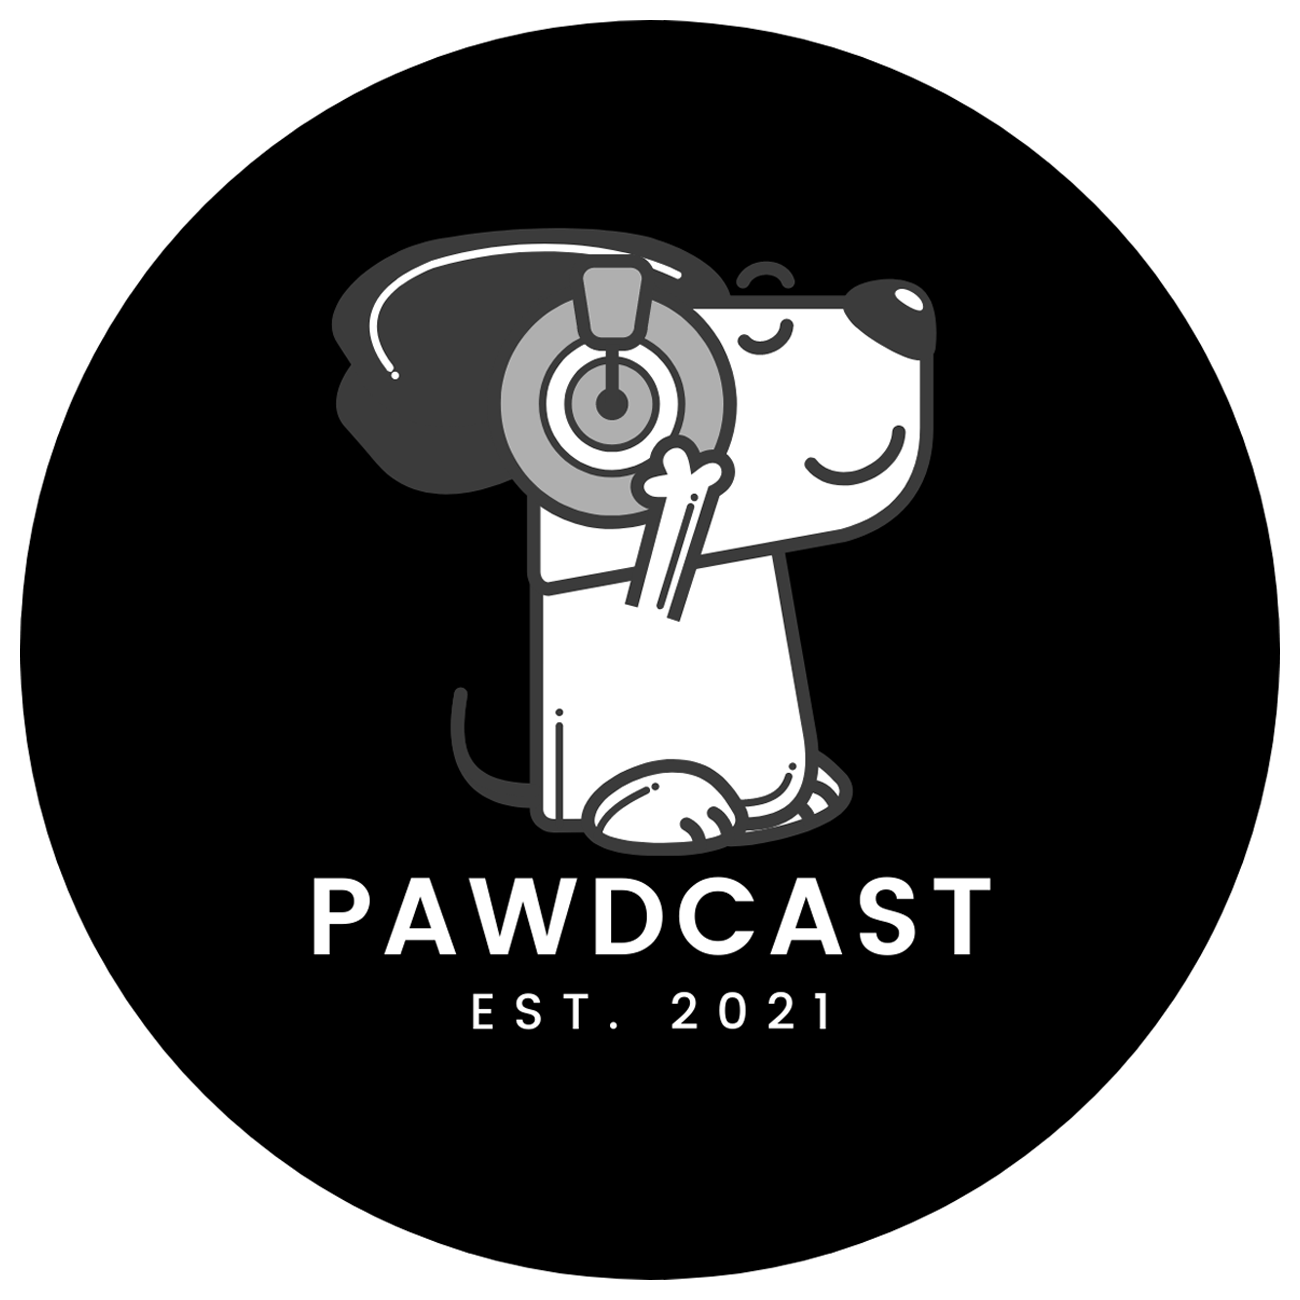 Pawdcast LLC